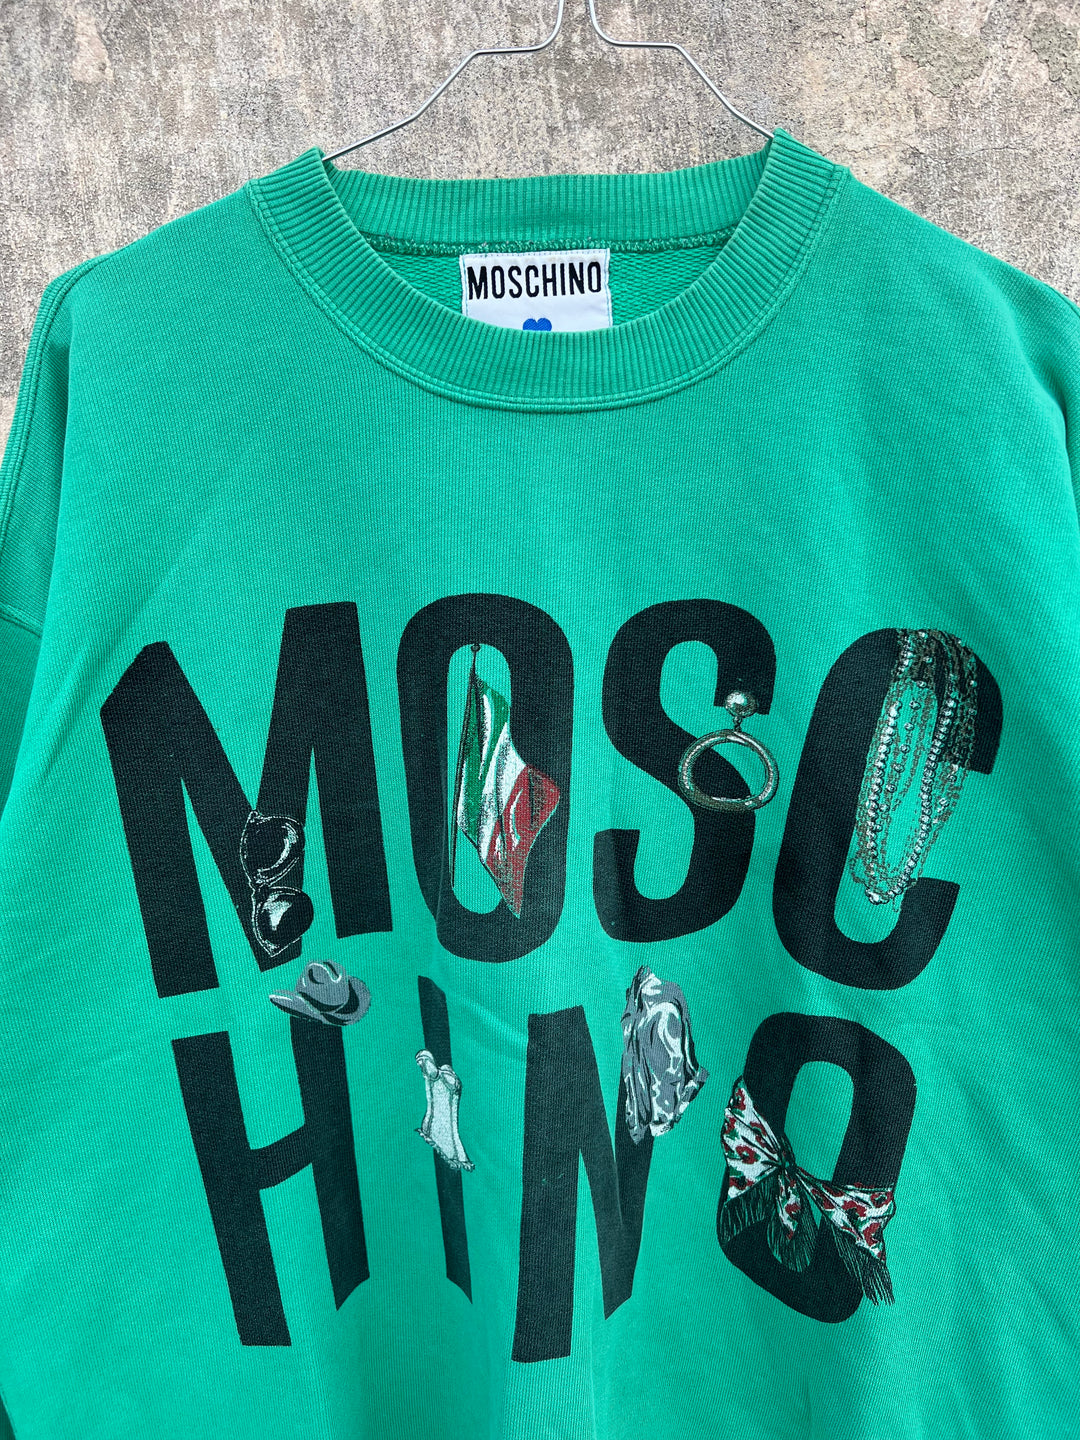 Moschino vintage sweatshirt Women's Medium